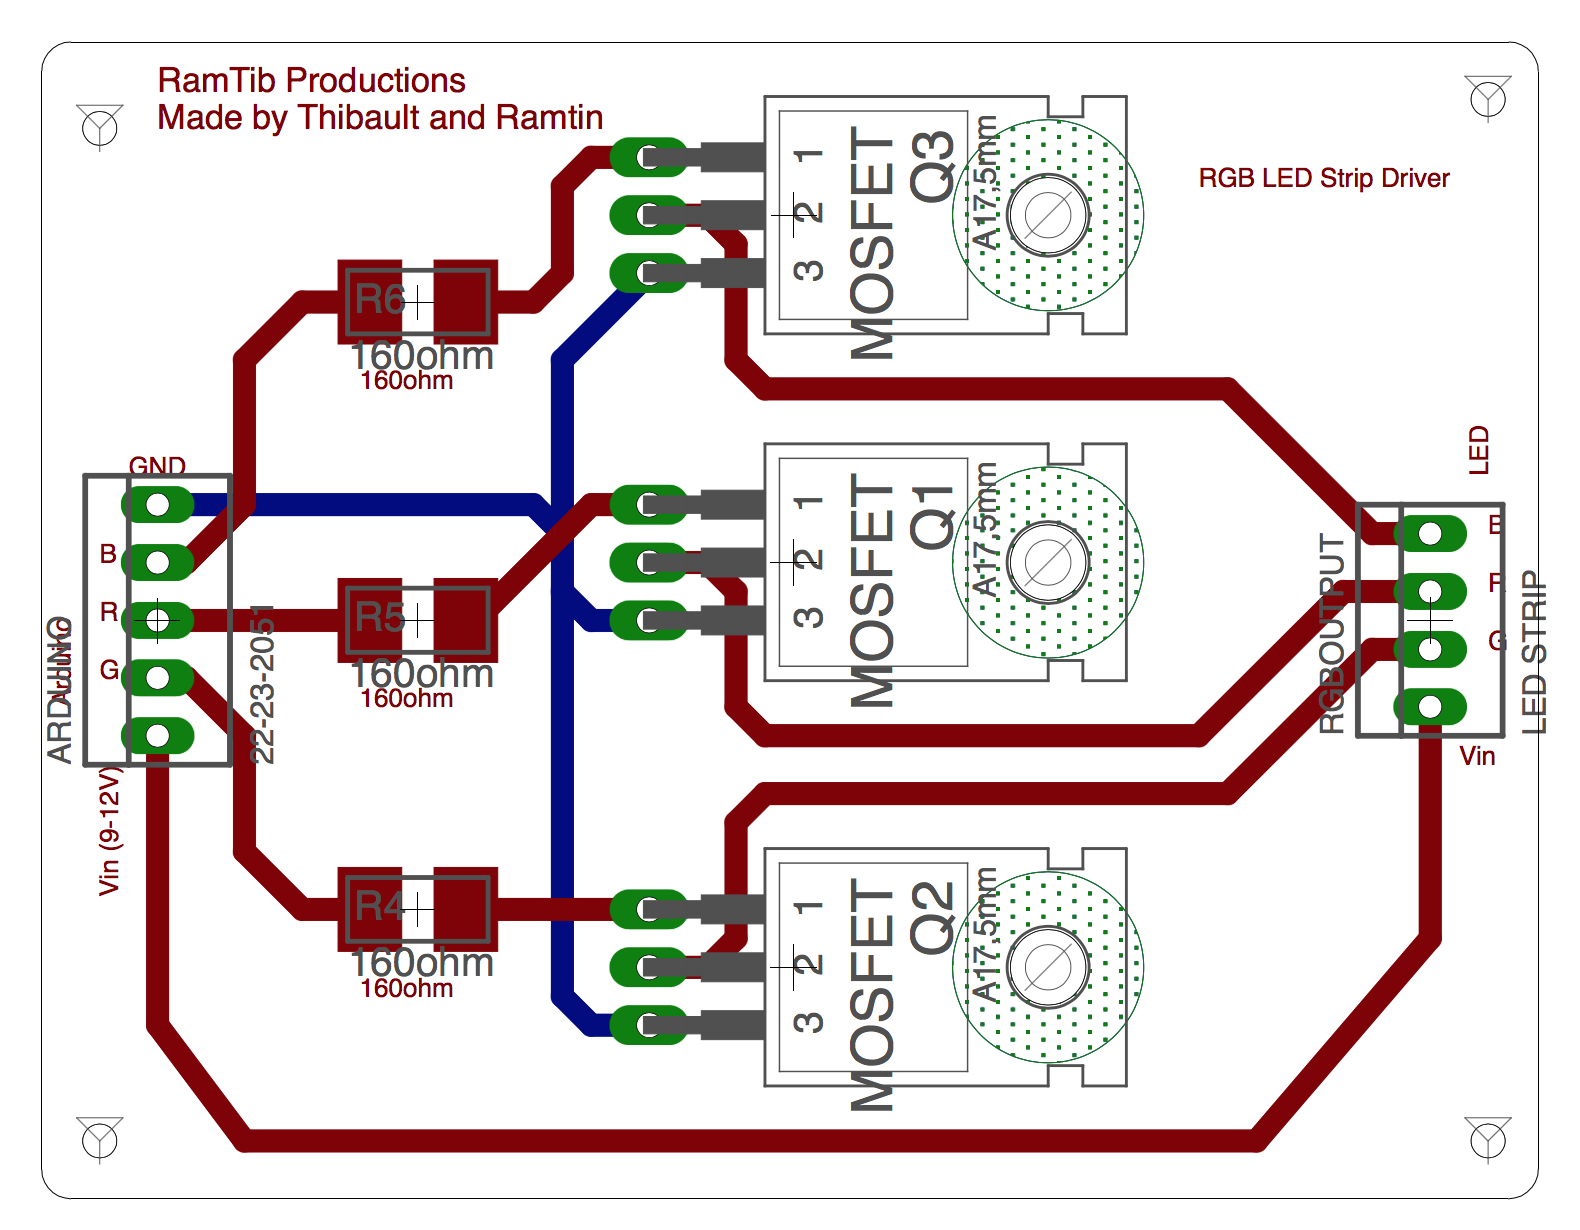 Rgb Led 110V Wiring Diagram | Wiring Diagram - Rgb Led Wiring Diagram